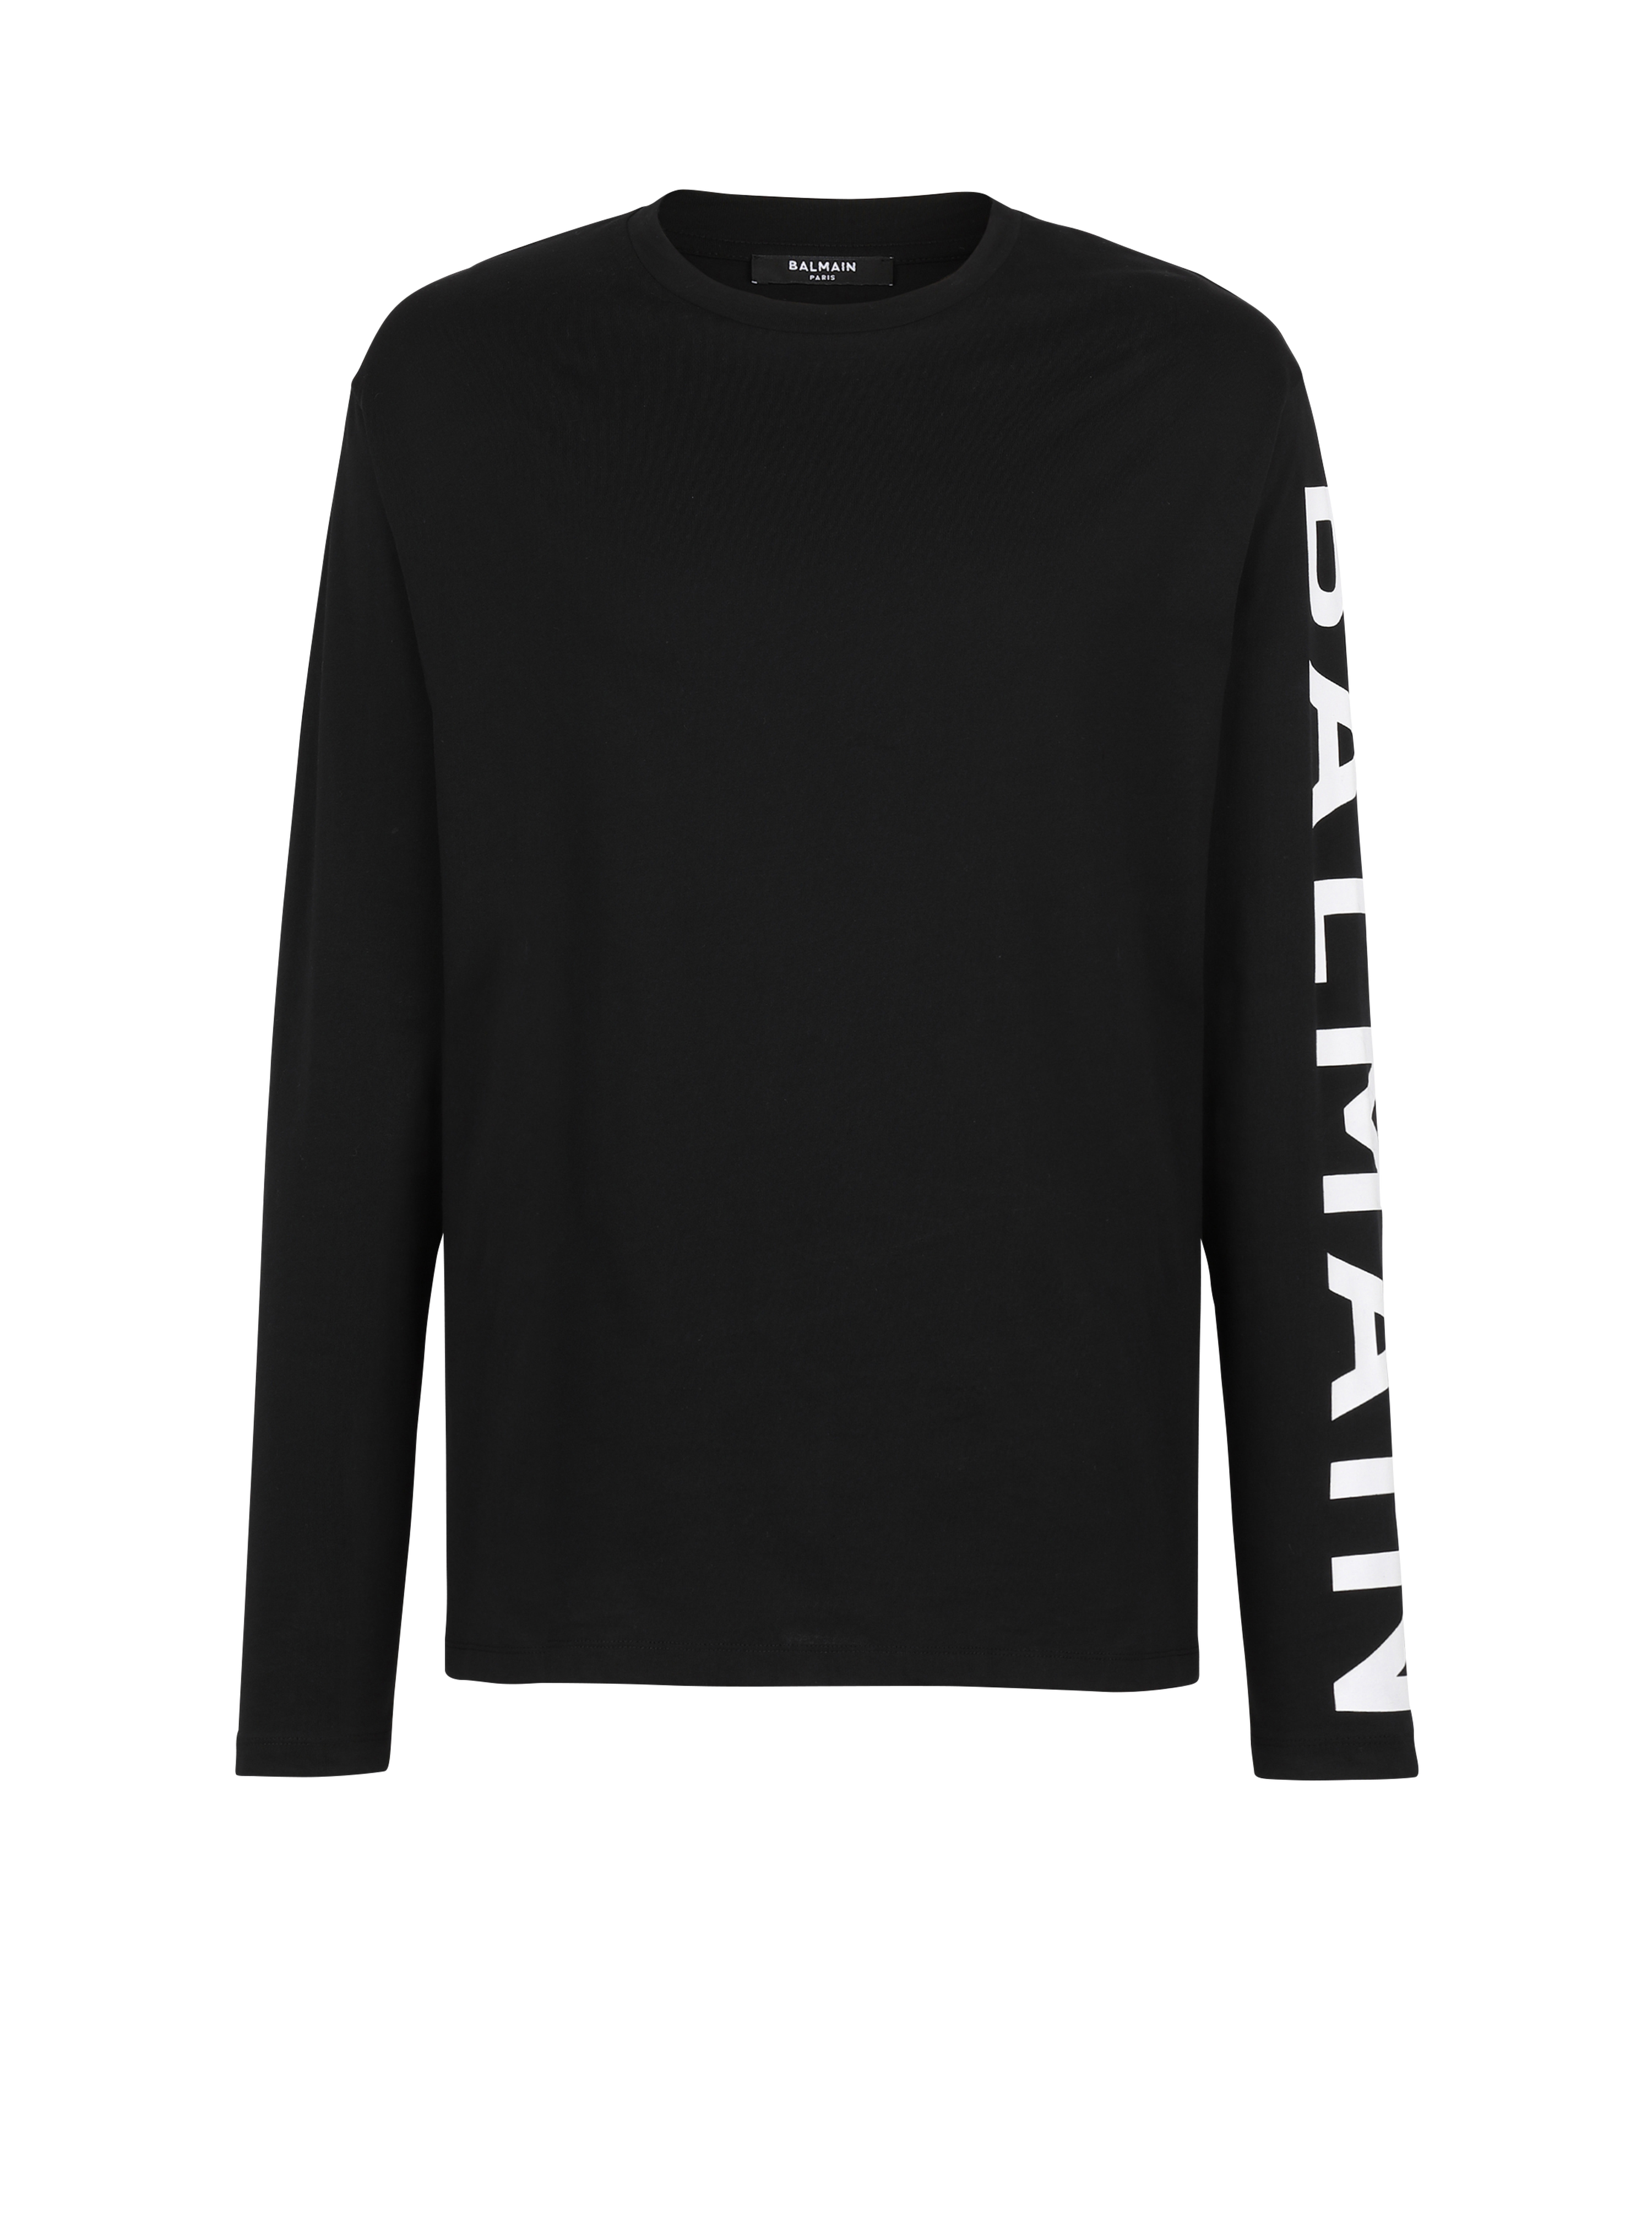 Long-sleeved cotton T-shirt with Balmain signature on sleeve , black